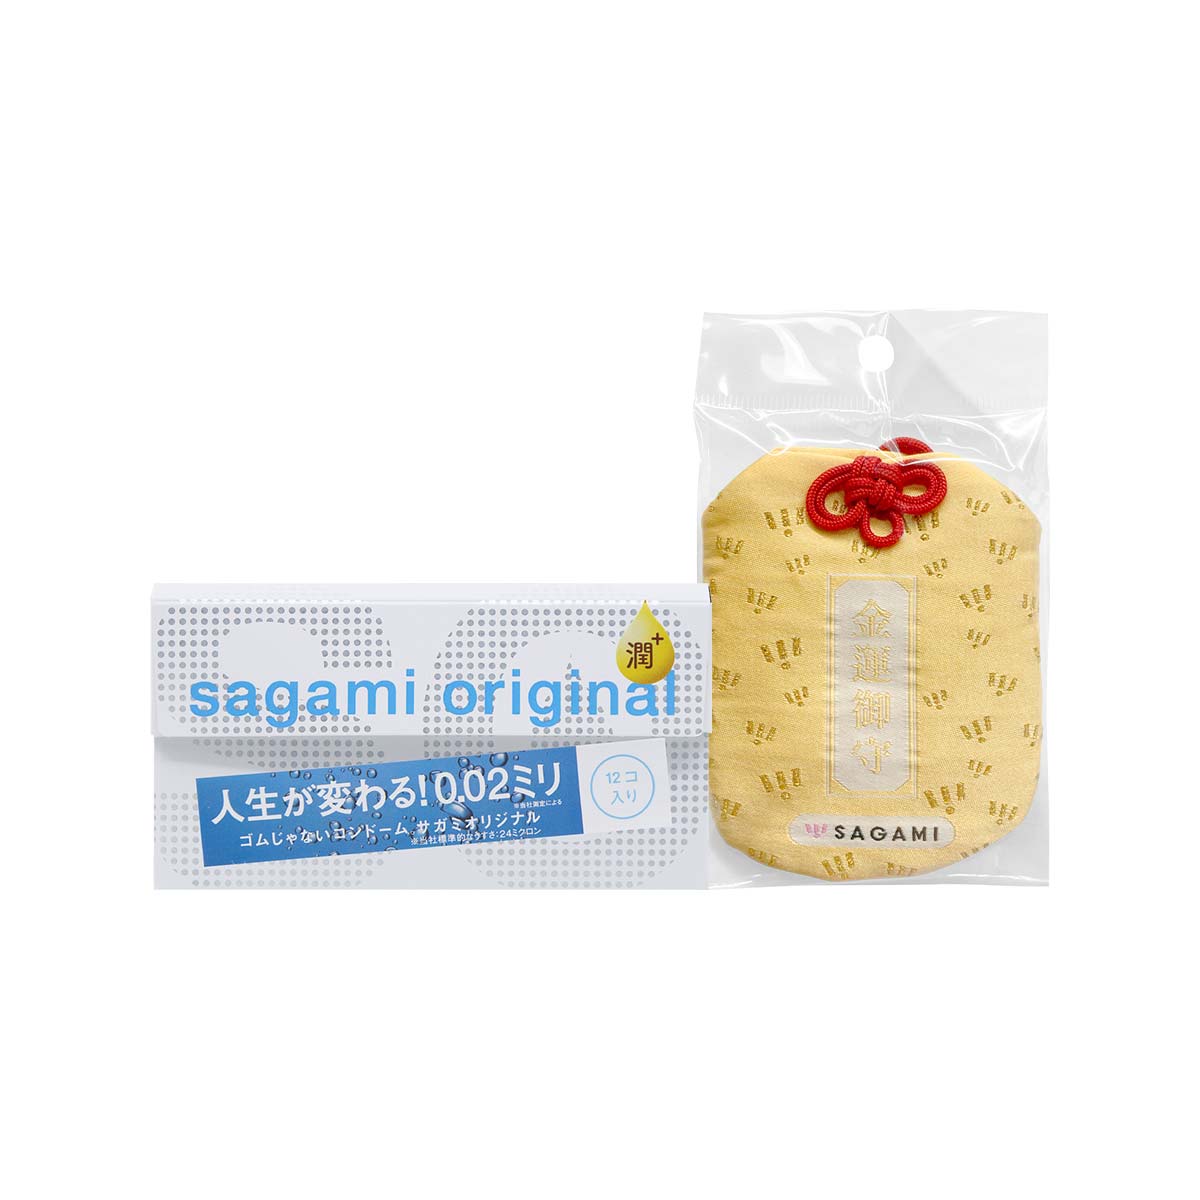 Sagami Original 0.02 Extra Lubricated 12's Pack PU Condom + Sagami Gold Omamori-thumb_2